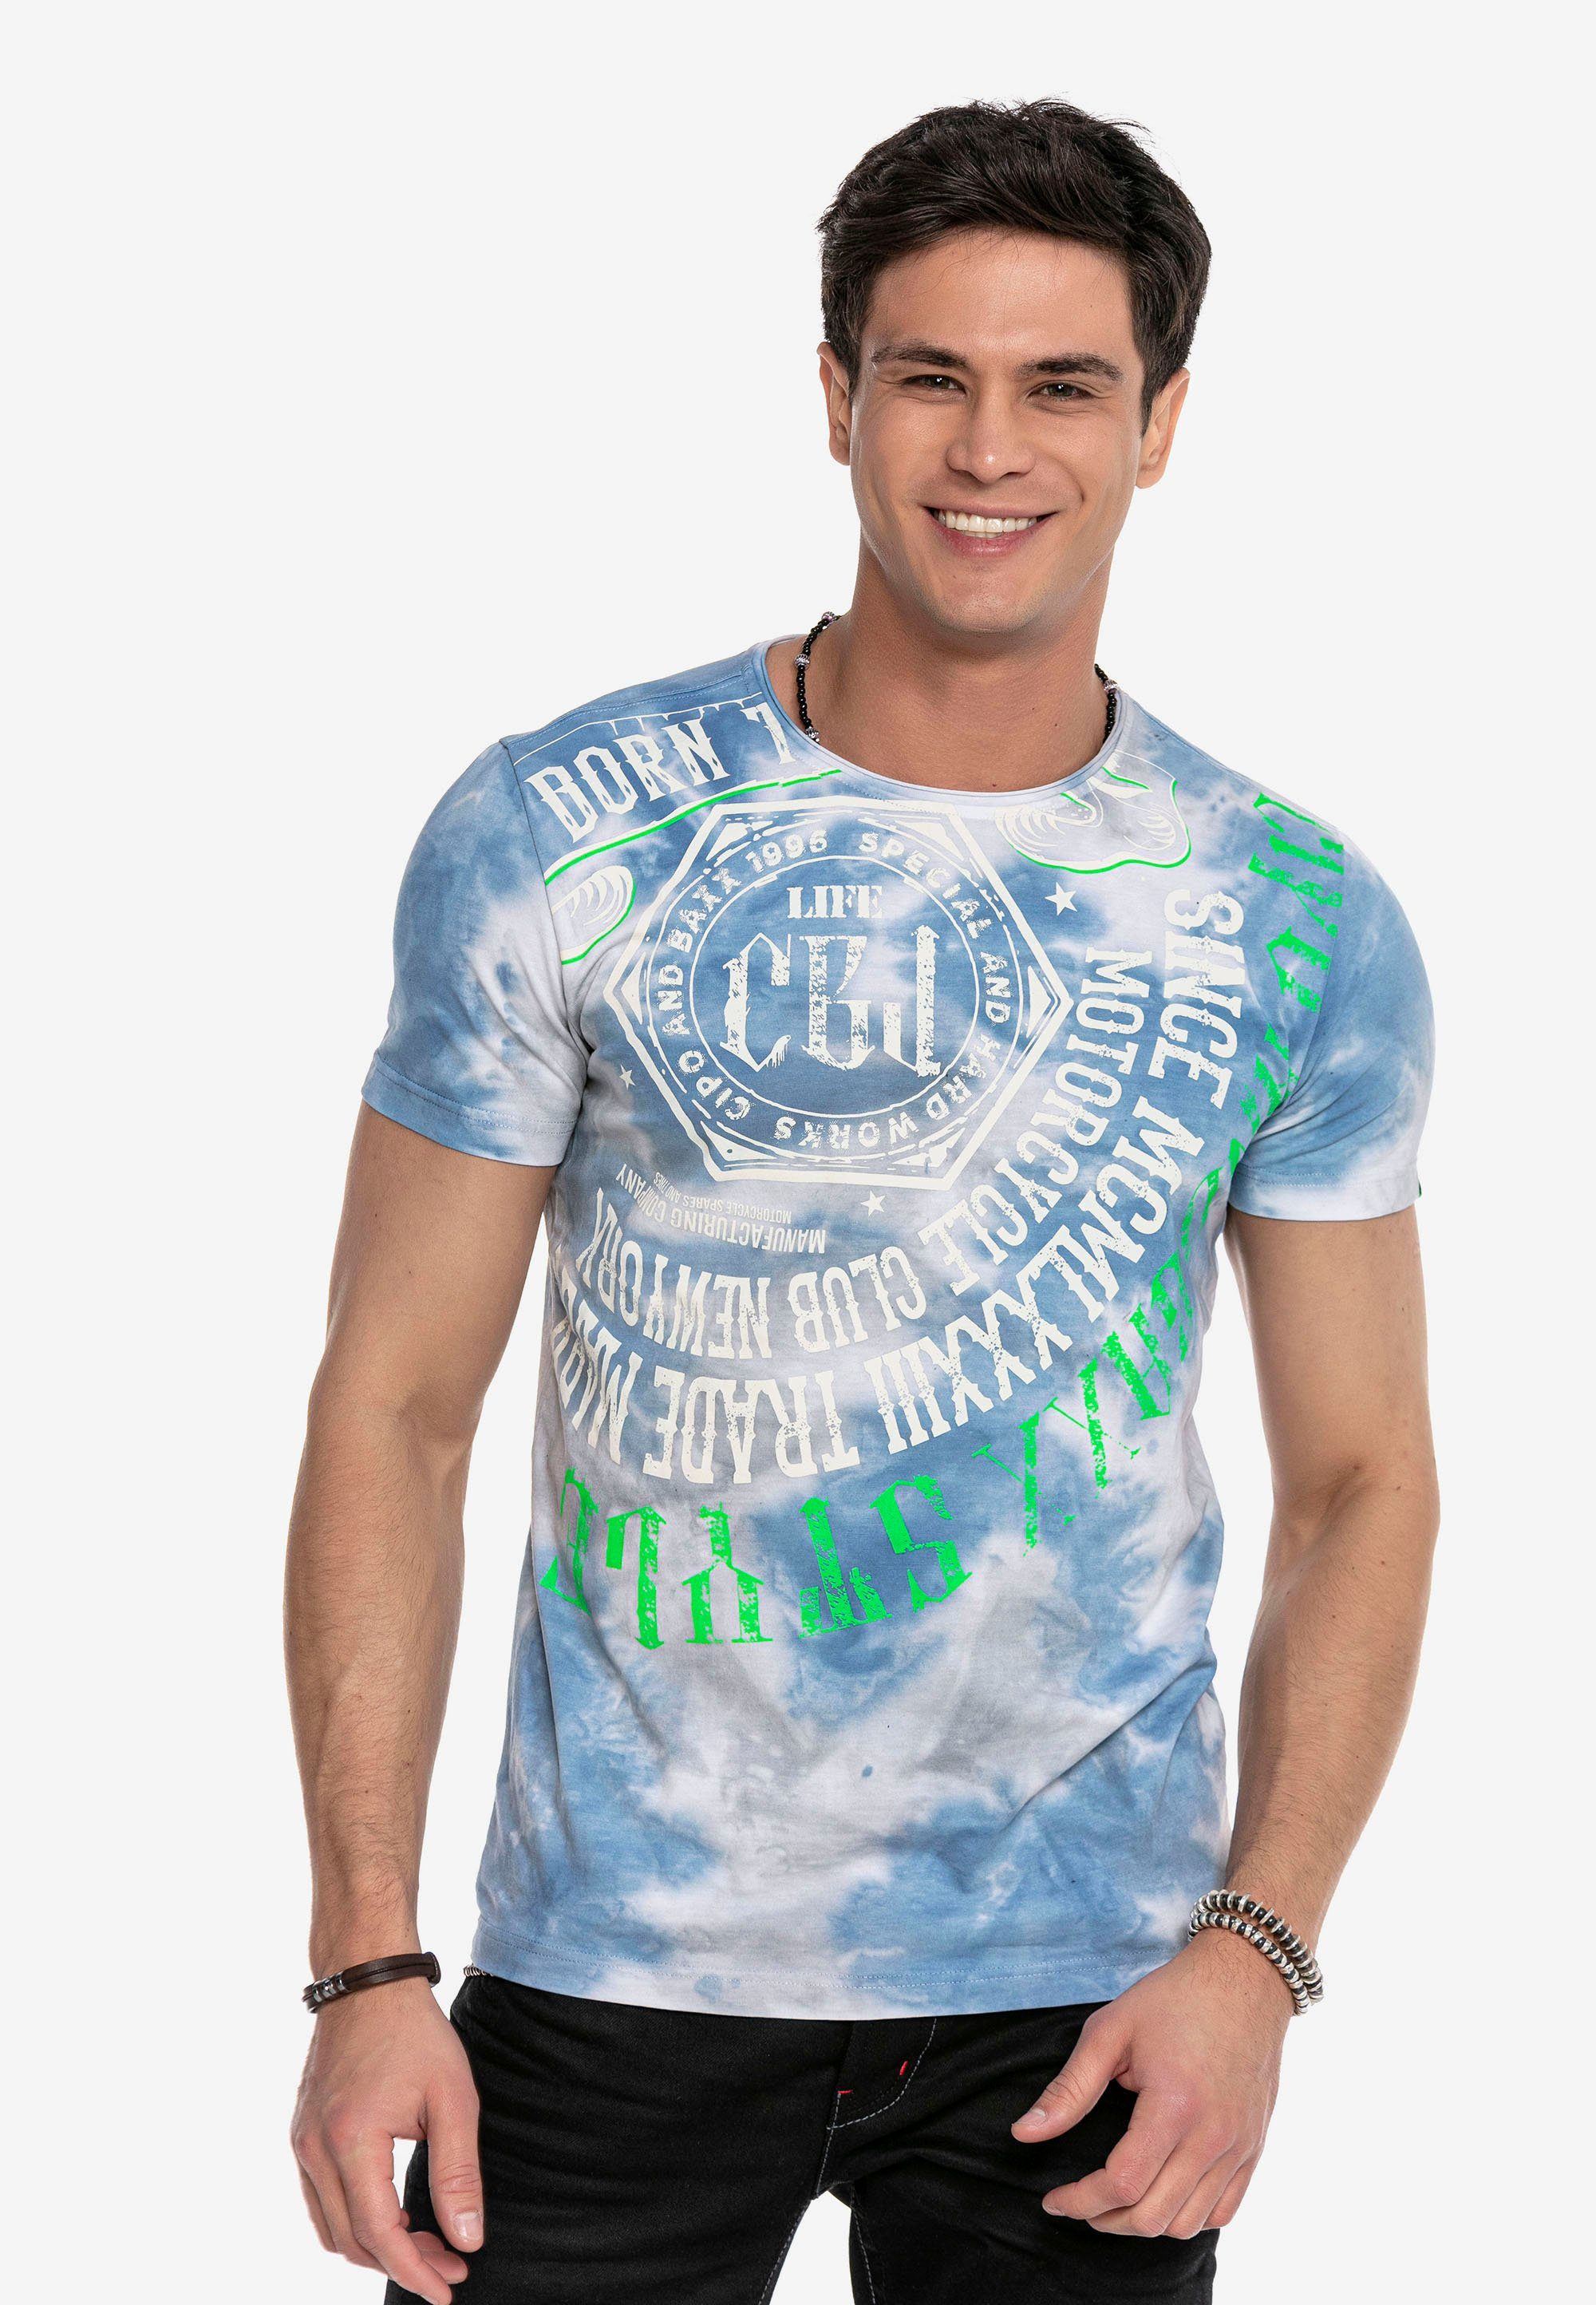 modischem Cipo & Baxx T-Shirt mit blau-weiß Batik-Muster